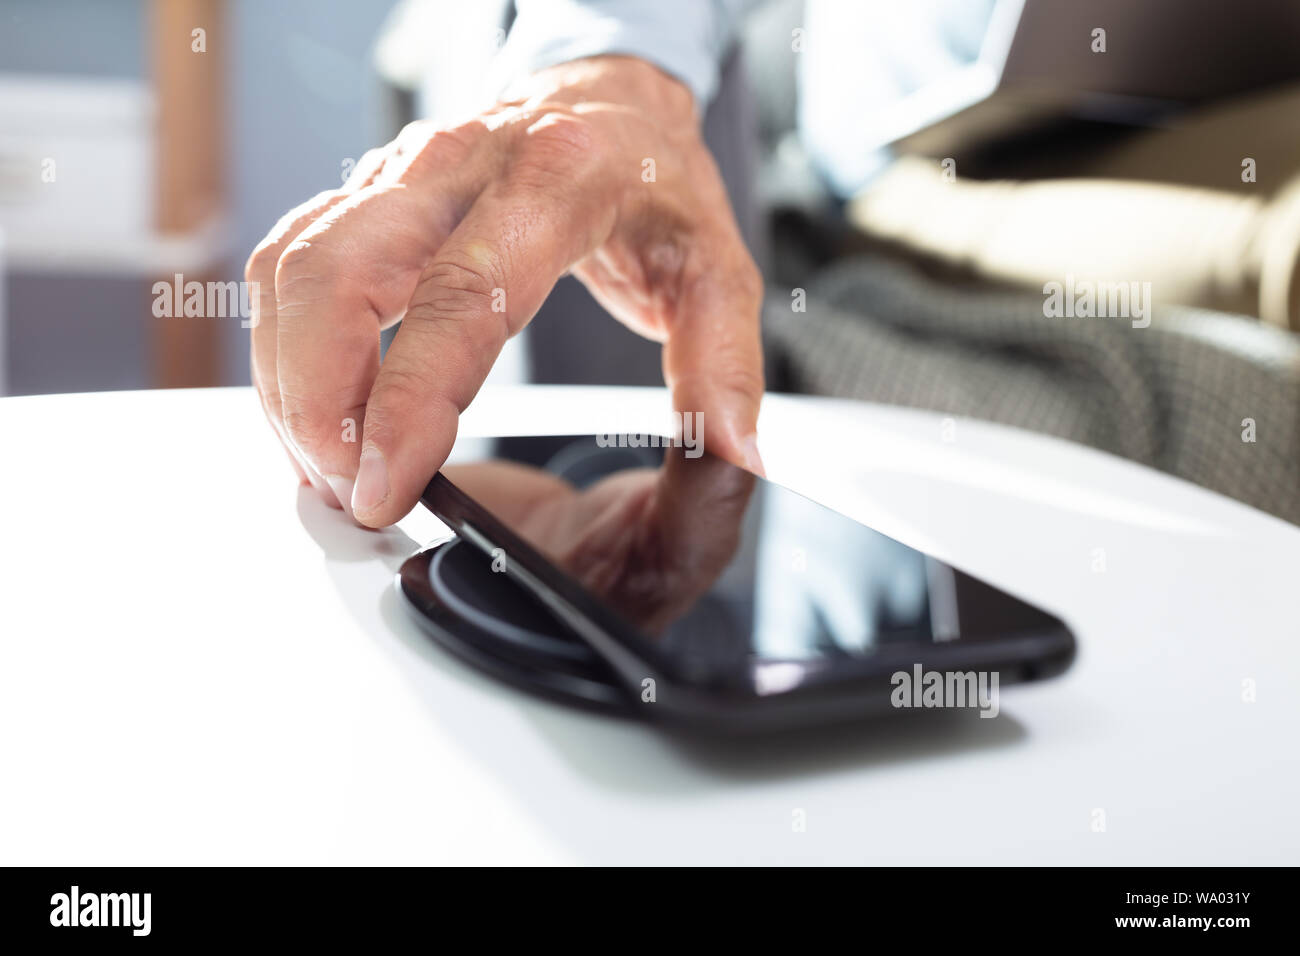 Man Charging Smartphone Using Wireless Charging Pad At Home Stock Photo